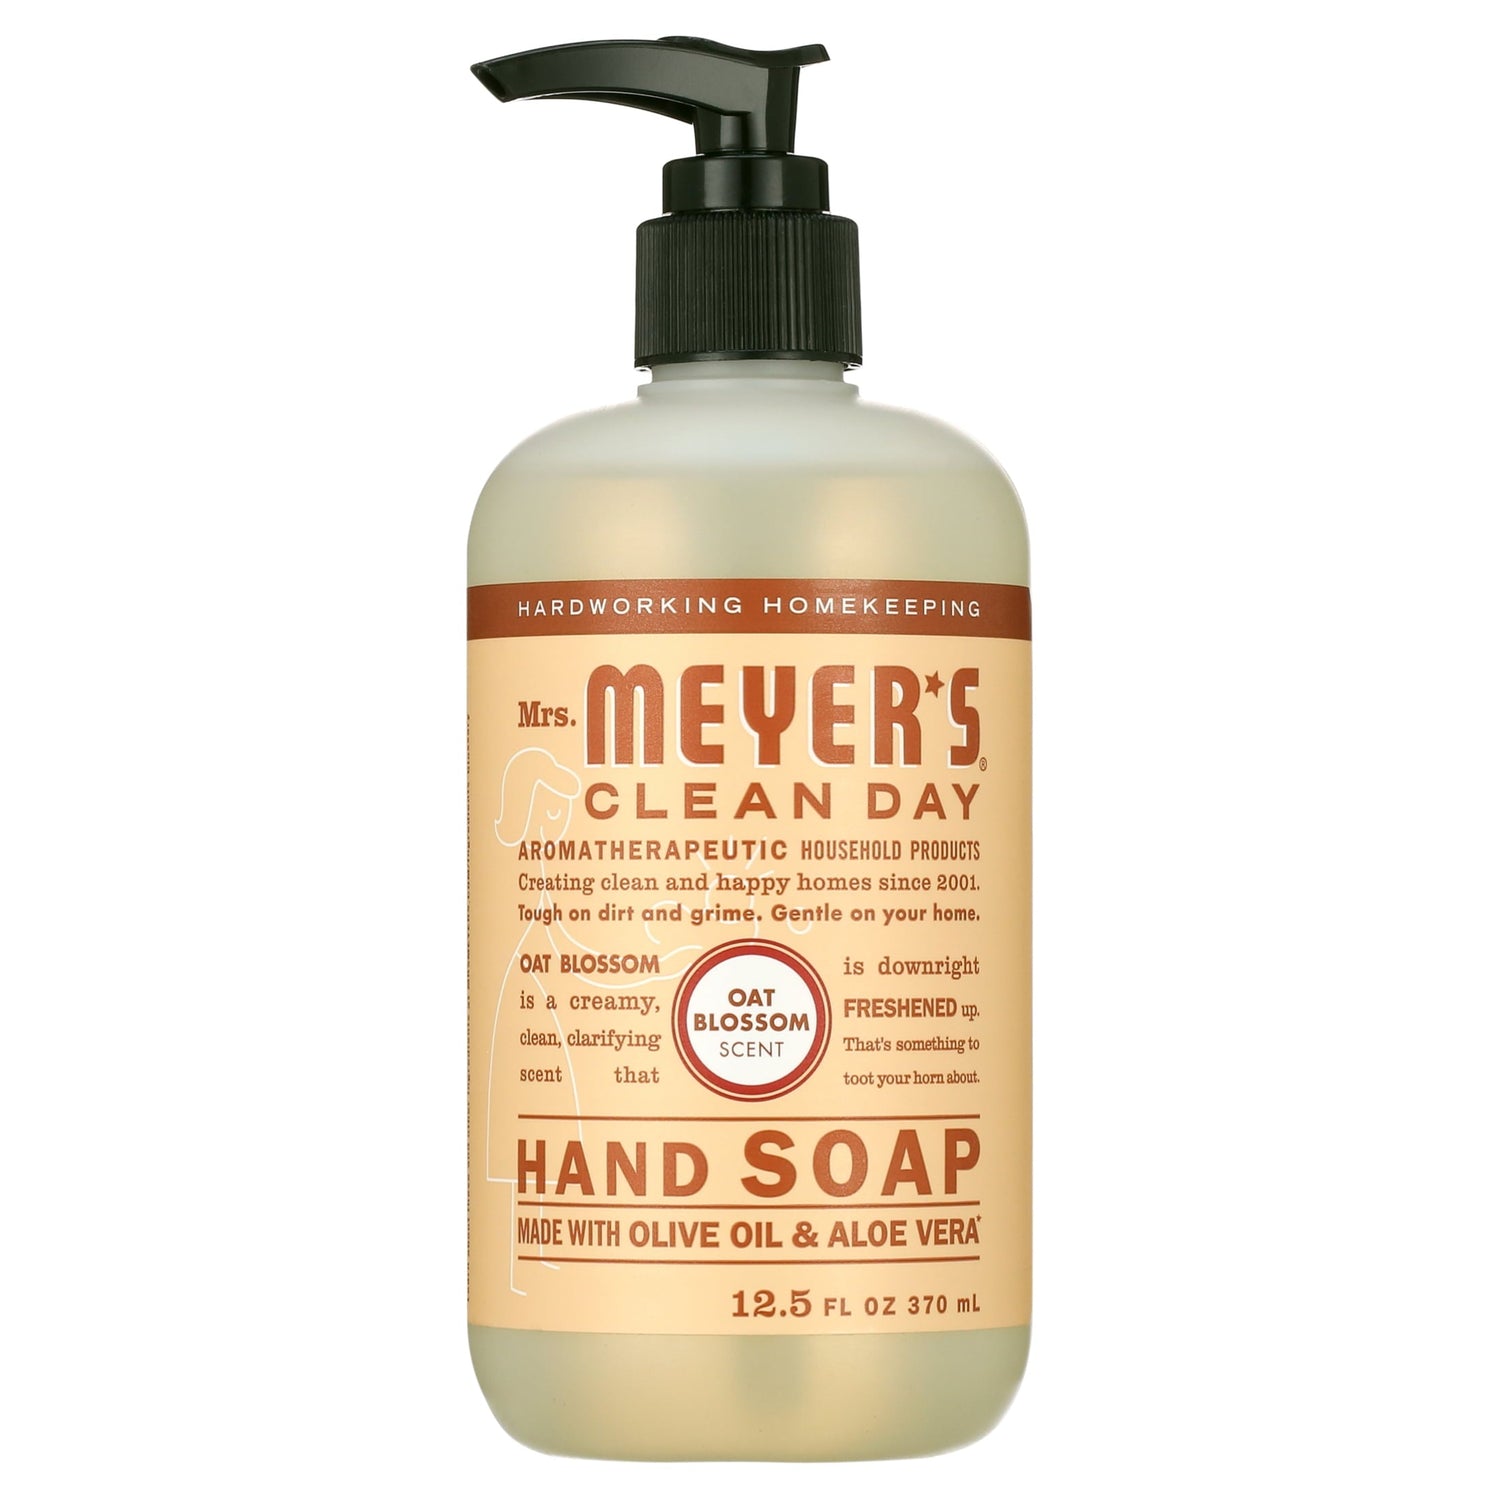 Hand soap & Wellness